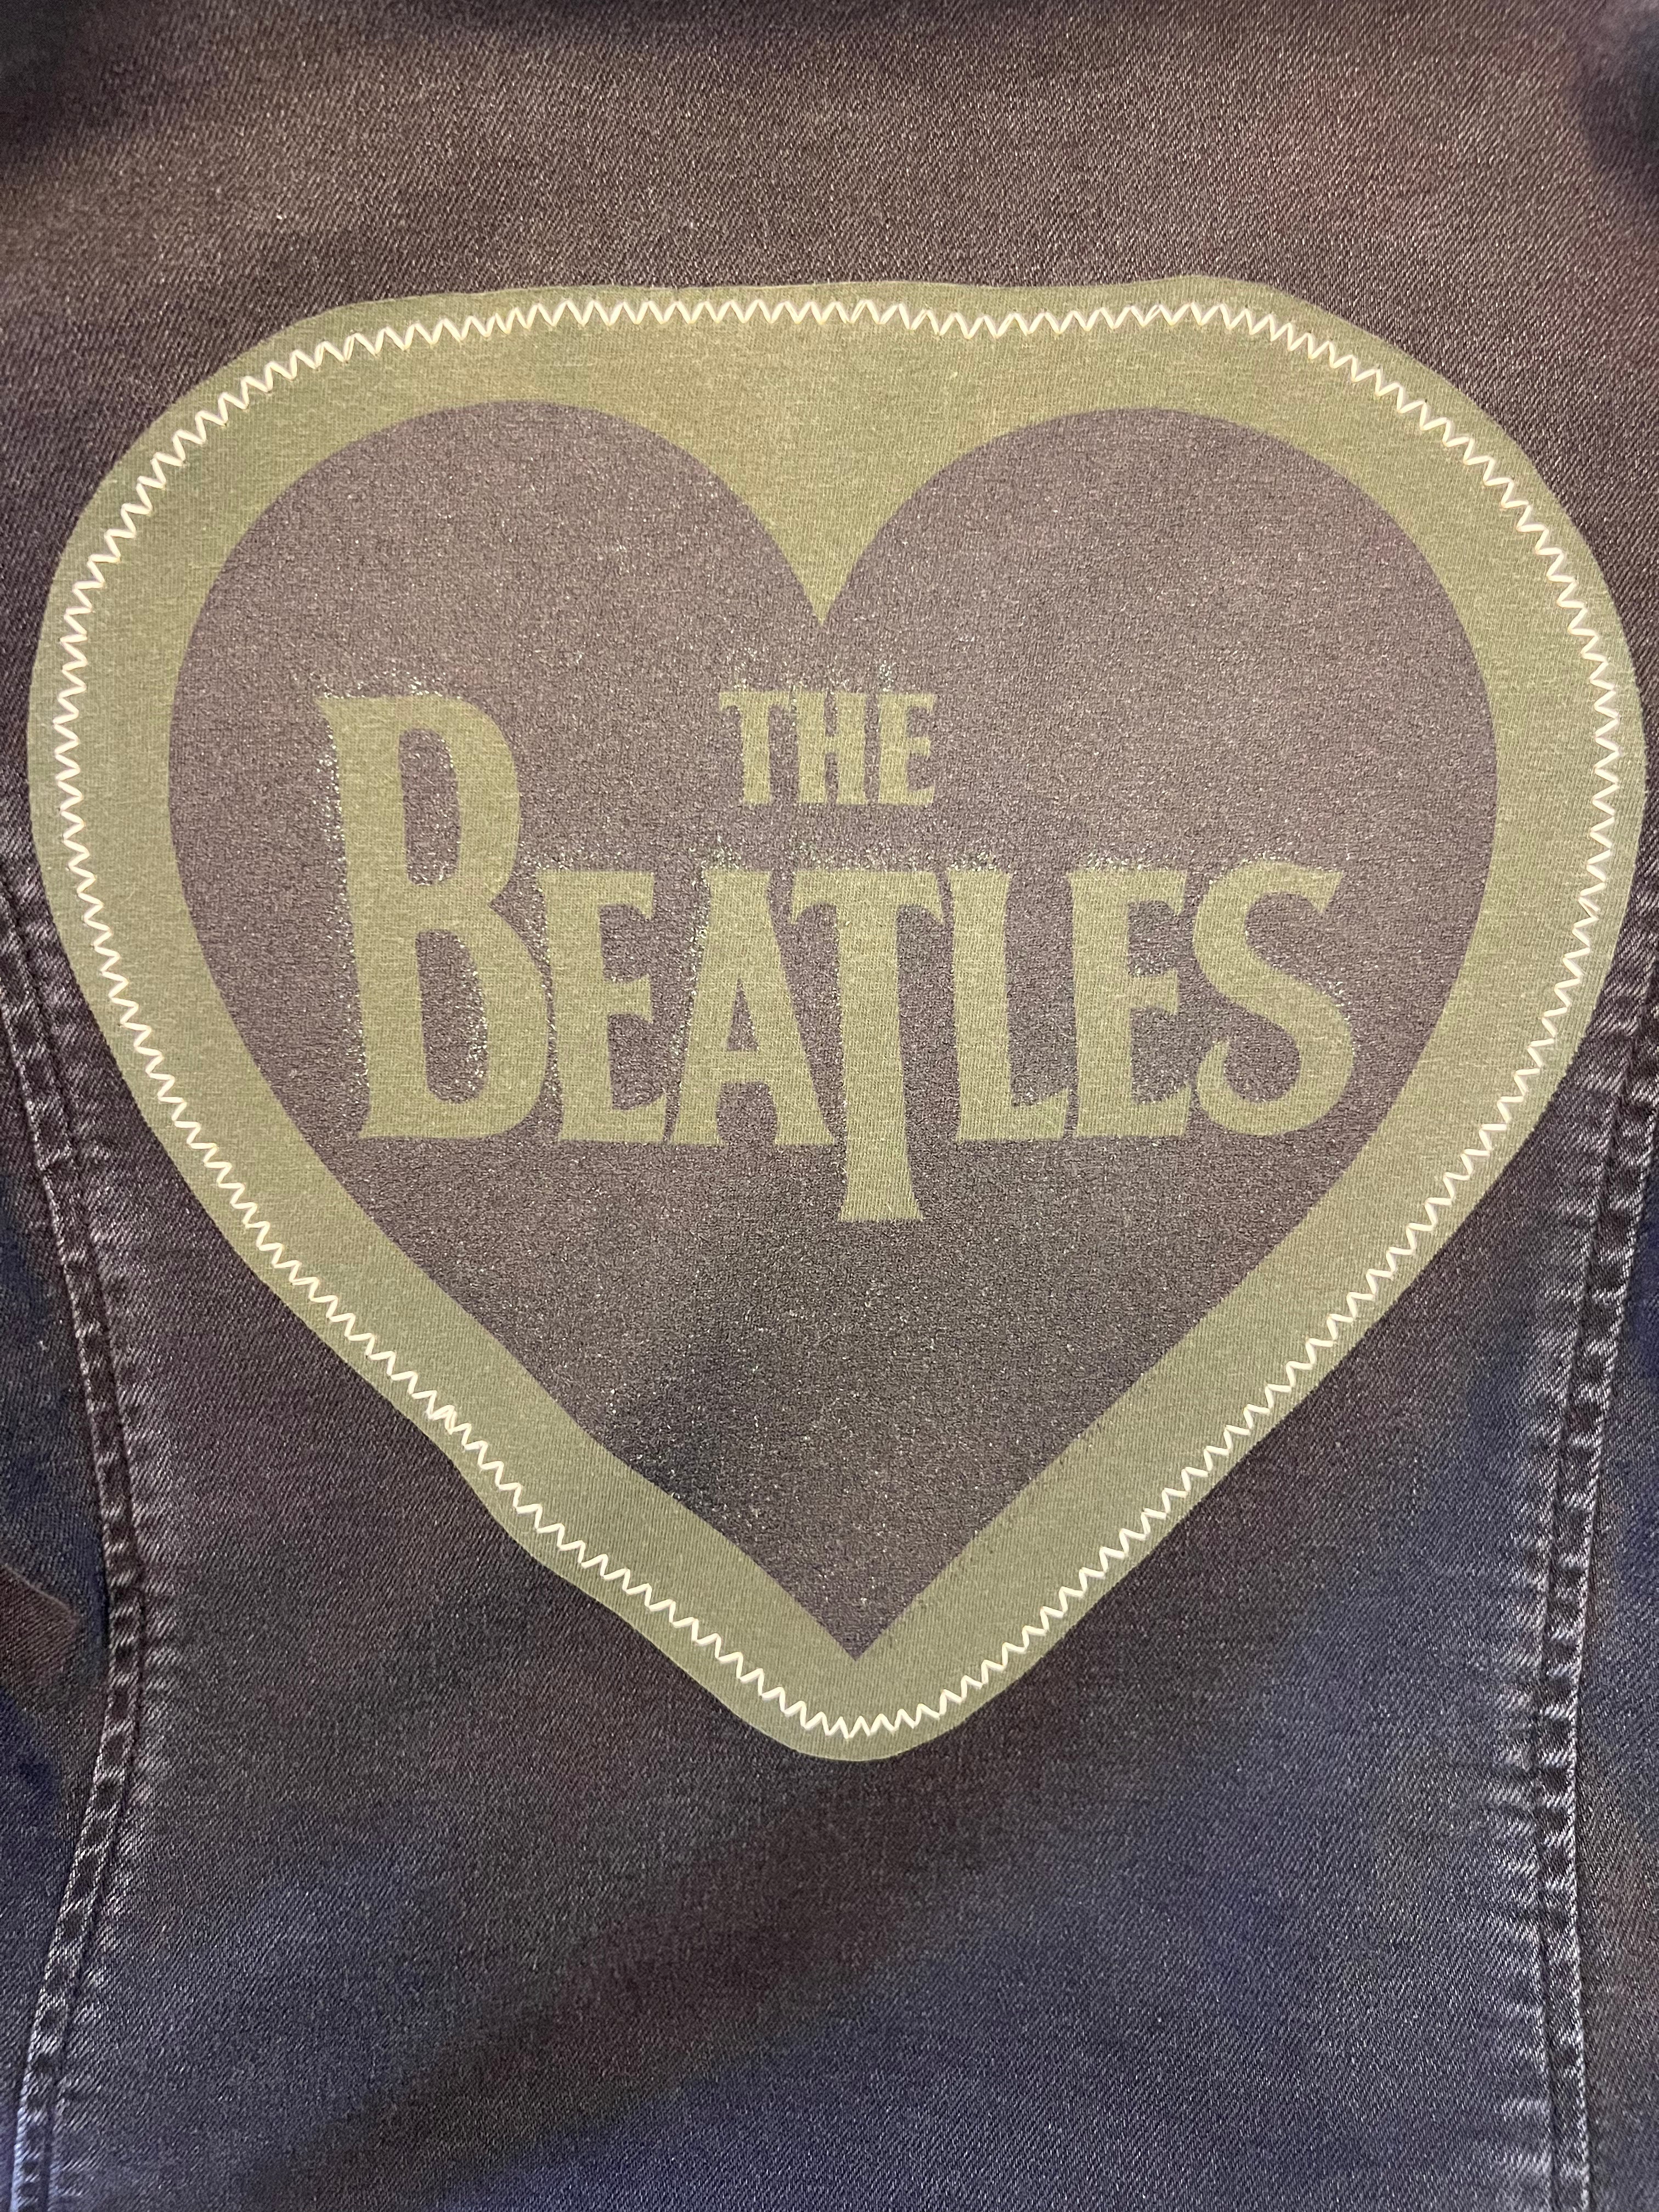 The Beatles Blackbird (Women's - Size S/M)